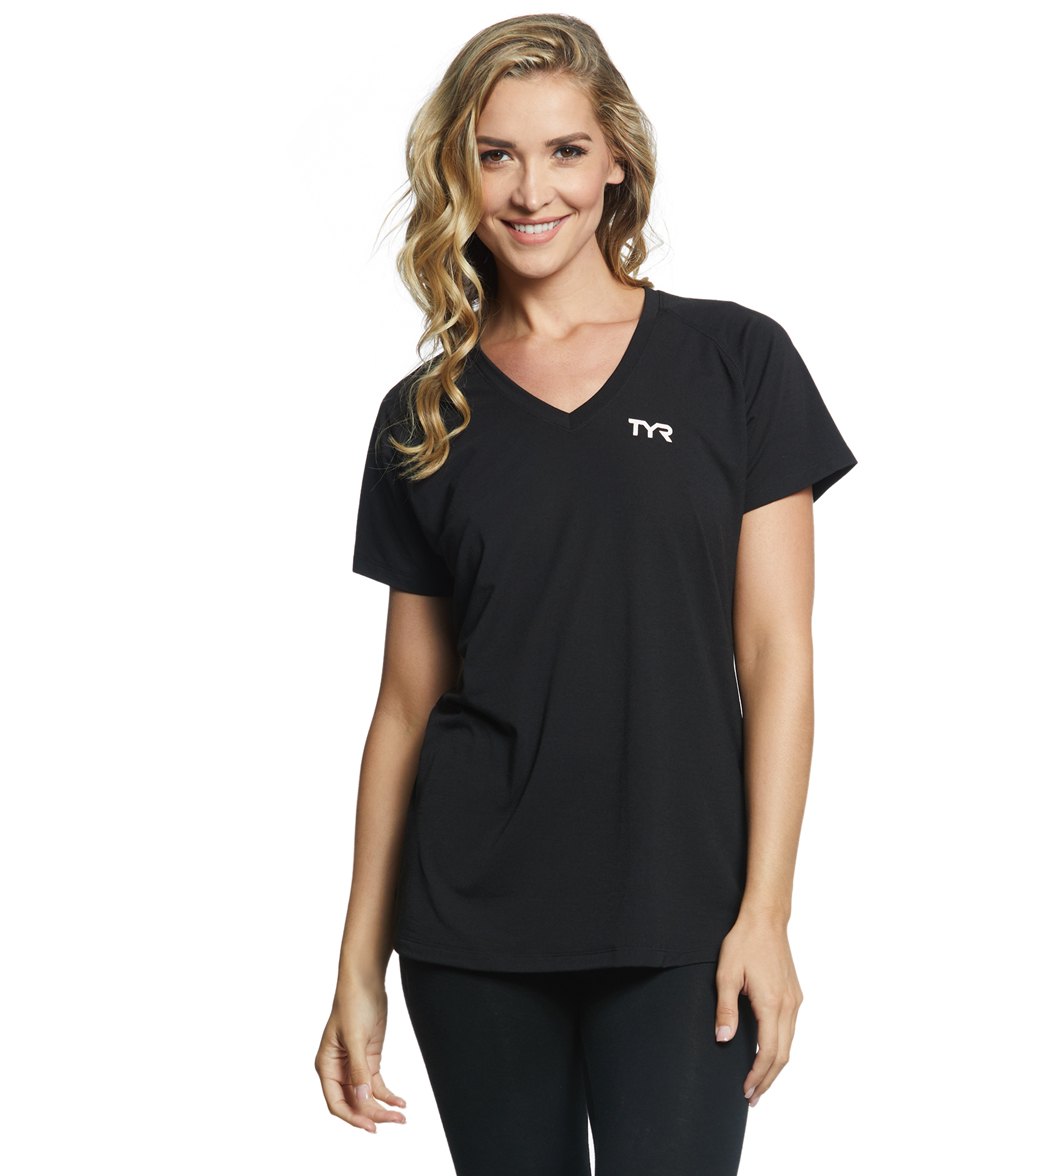 TYR Women's Alliance Tech Tee Shirt - Black Large Polyester/Spandex - Swimoutlet.com